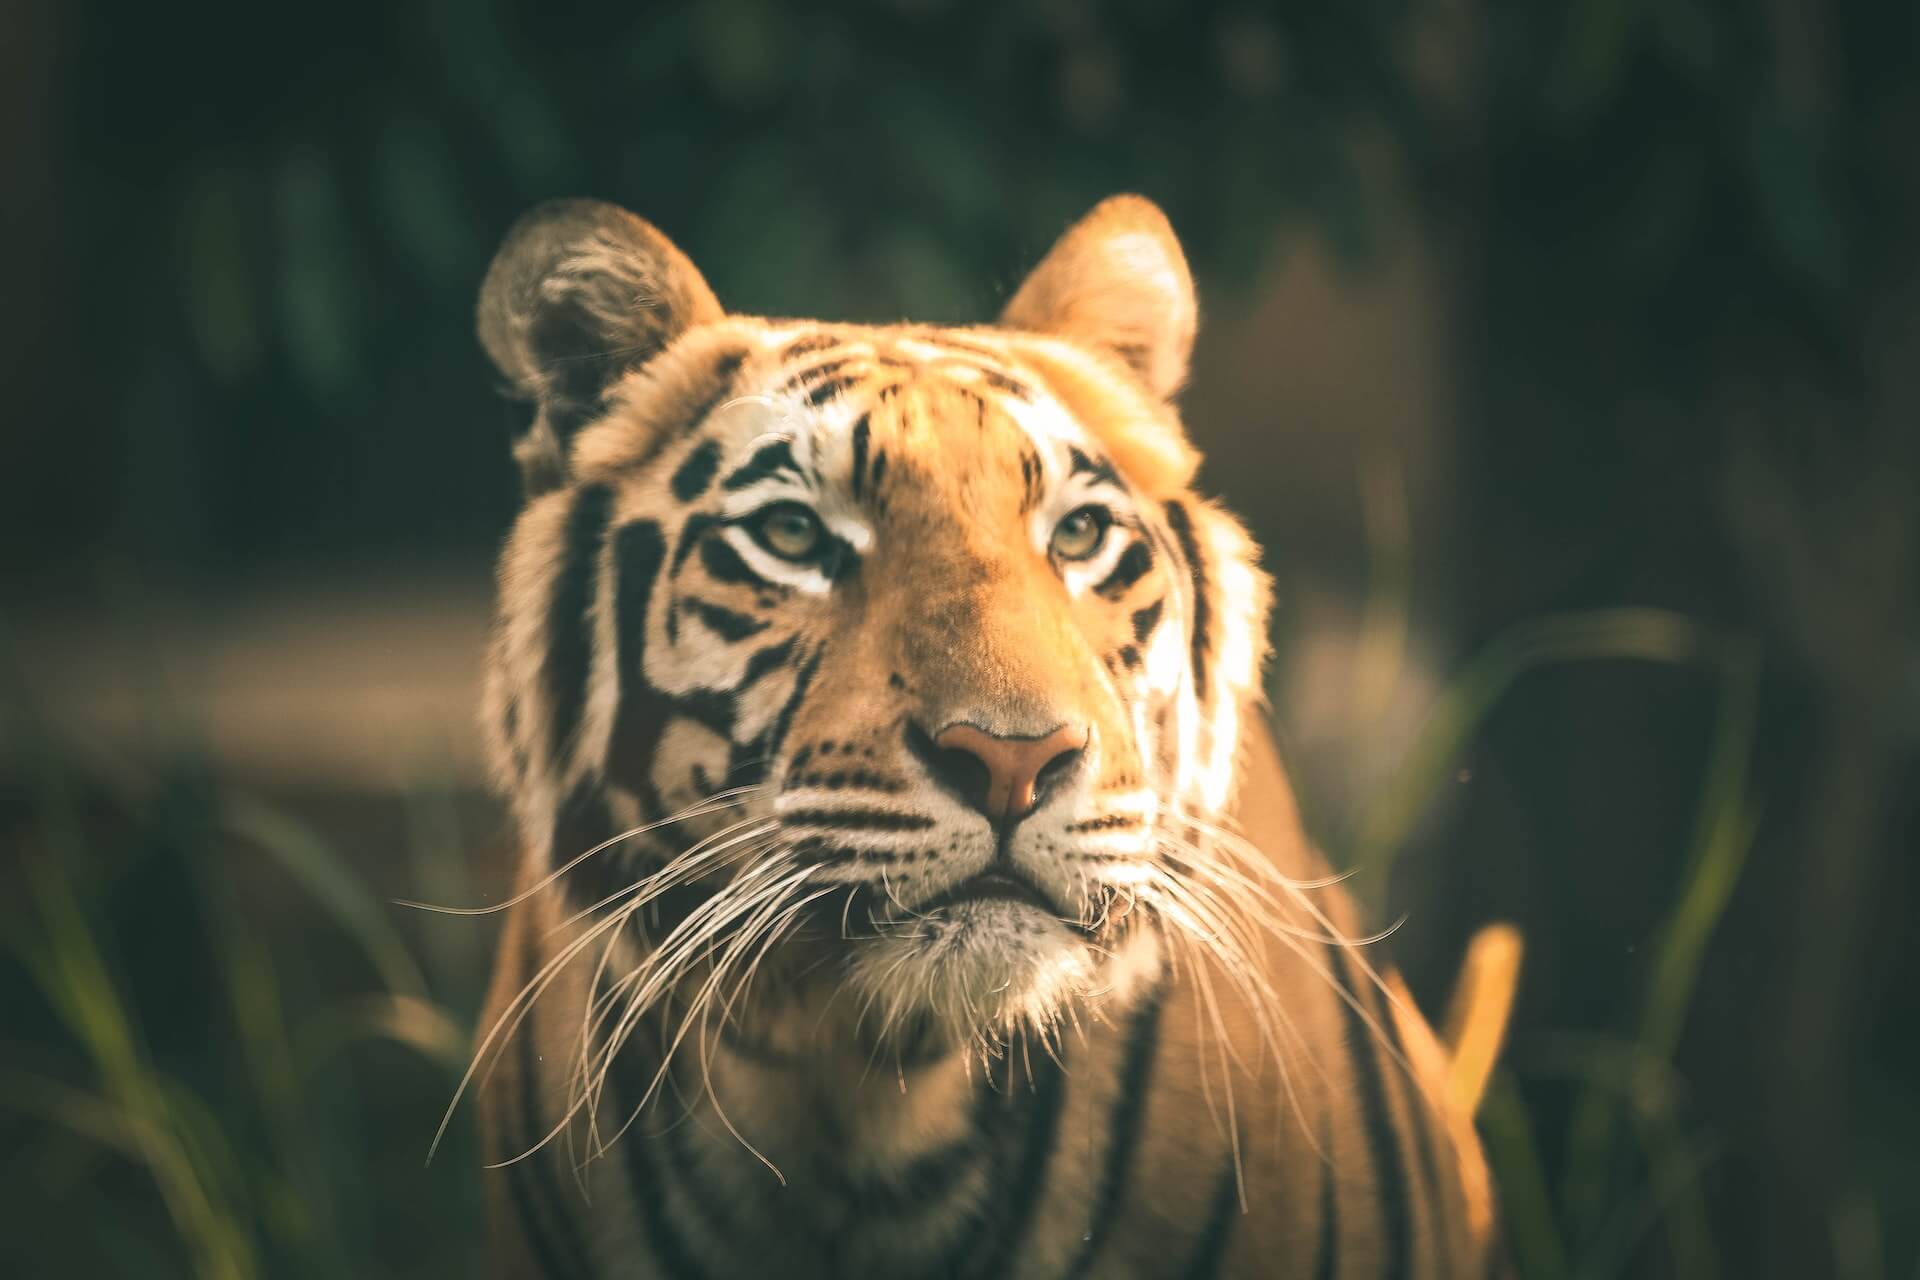 A tiger walking through a forest